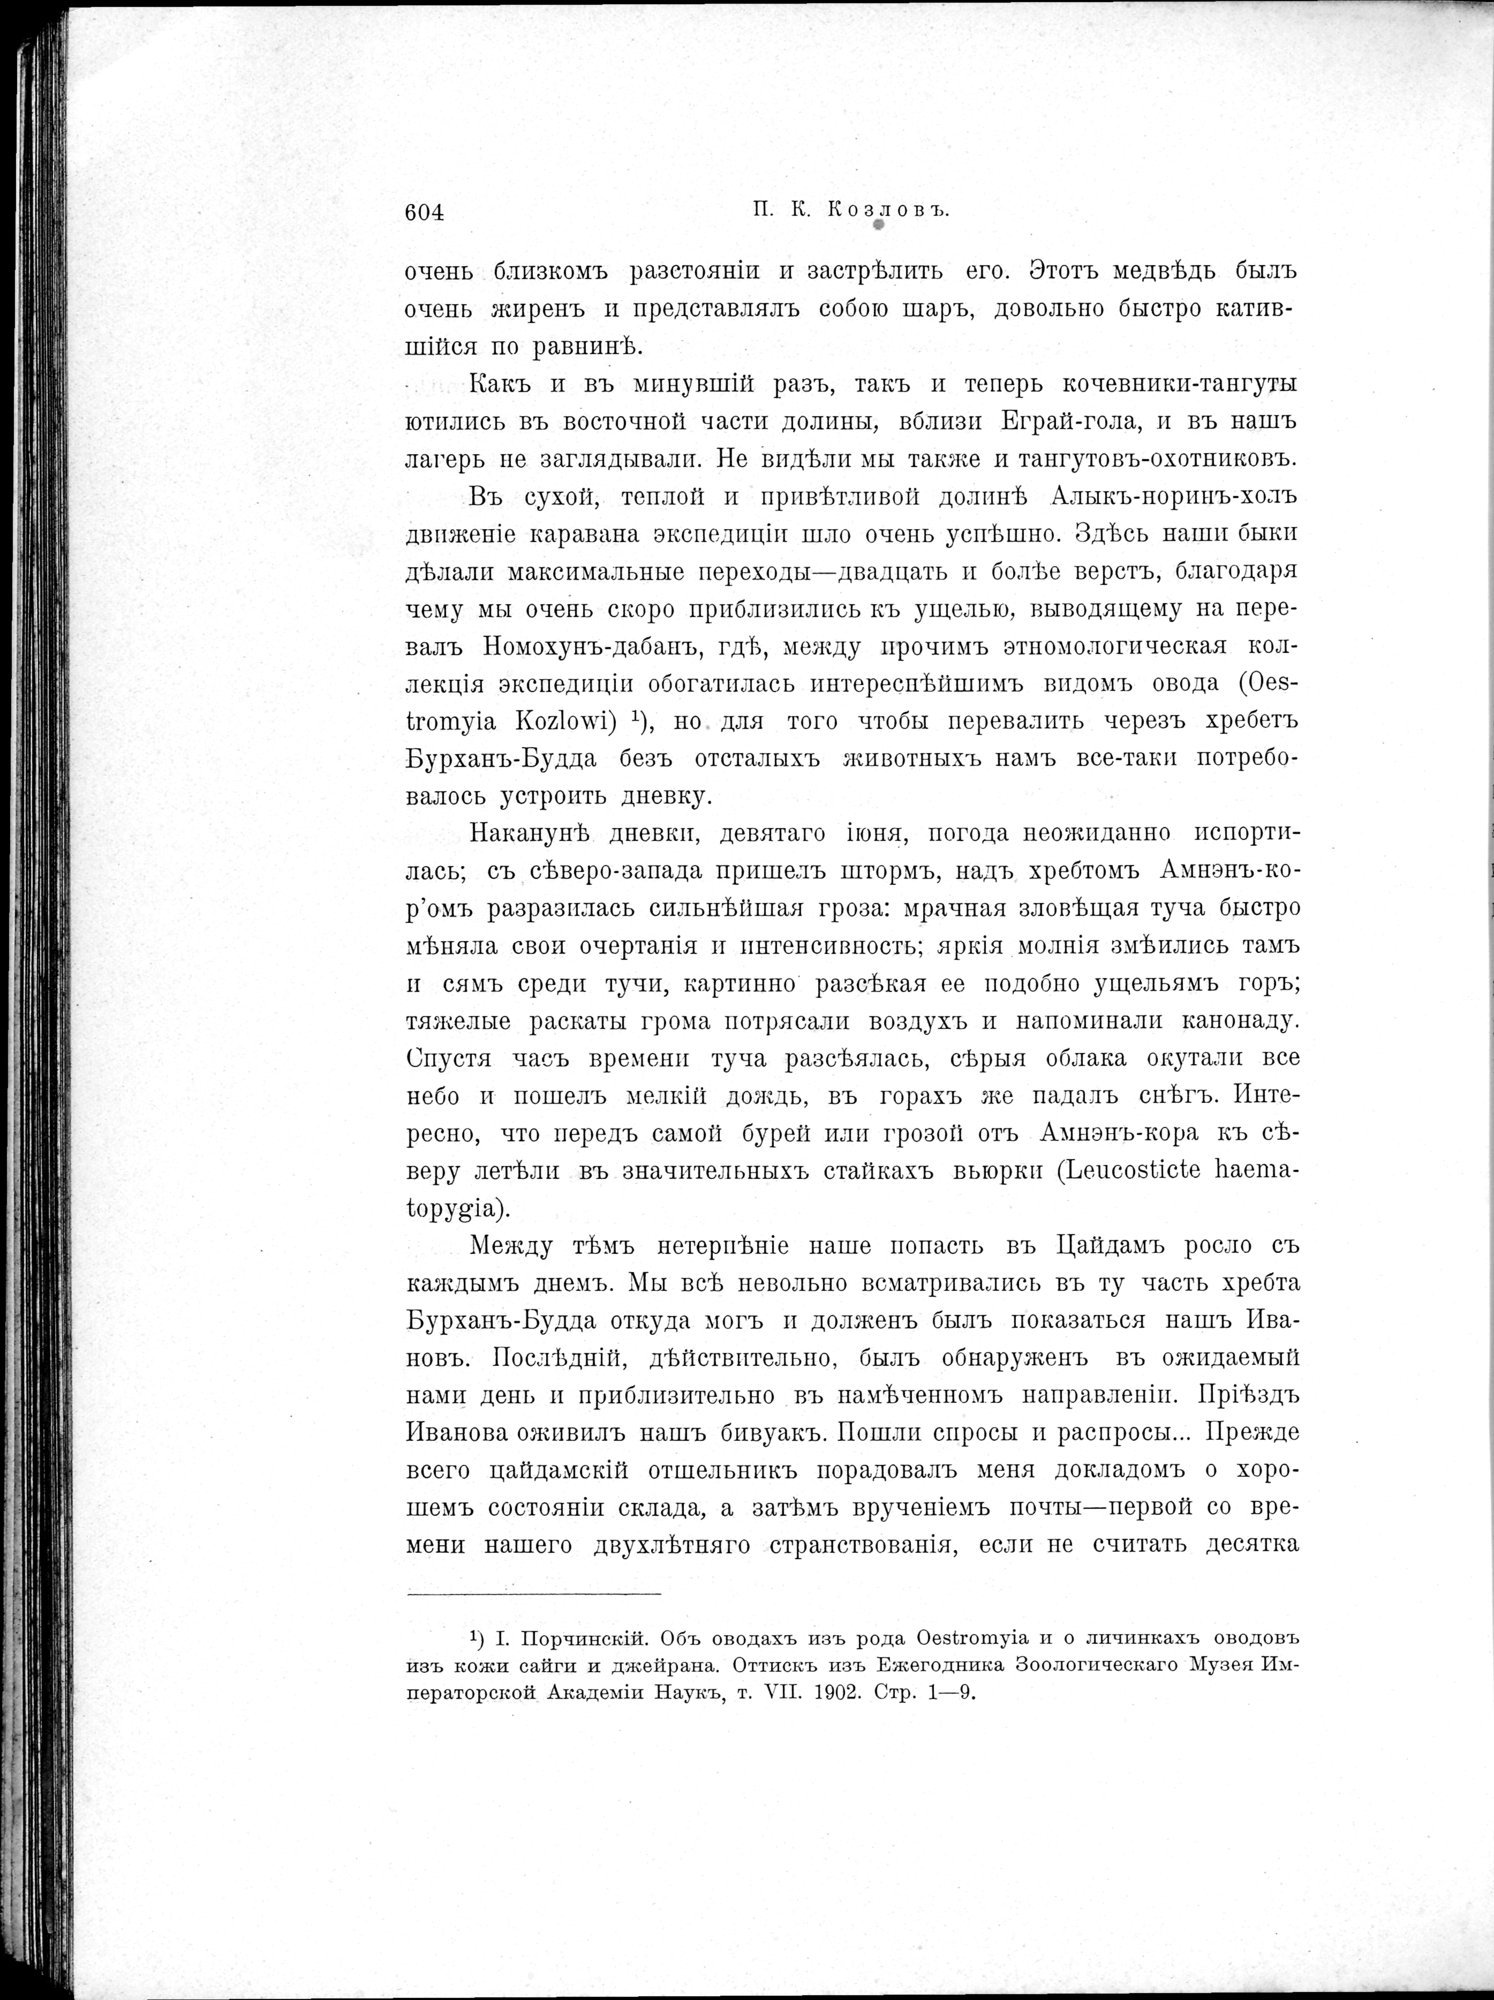 Mongoliia i Kam : vol.2 / Page 432 (Grayscale High Resolution Image)